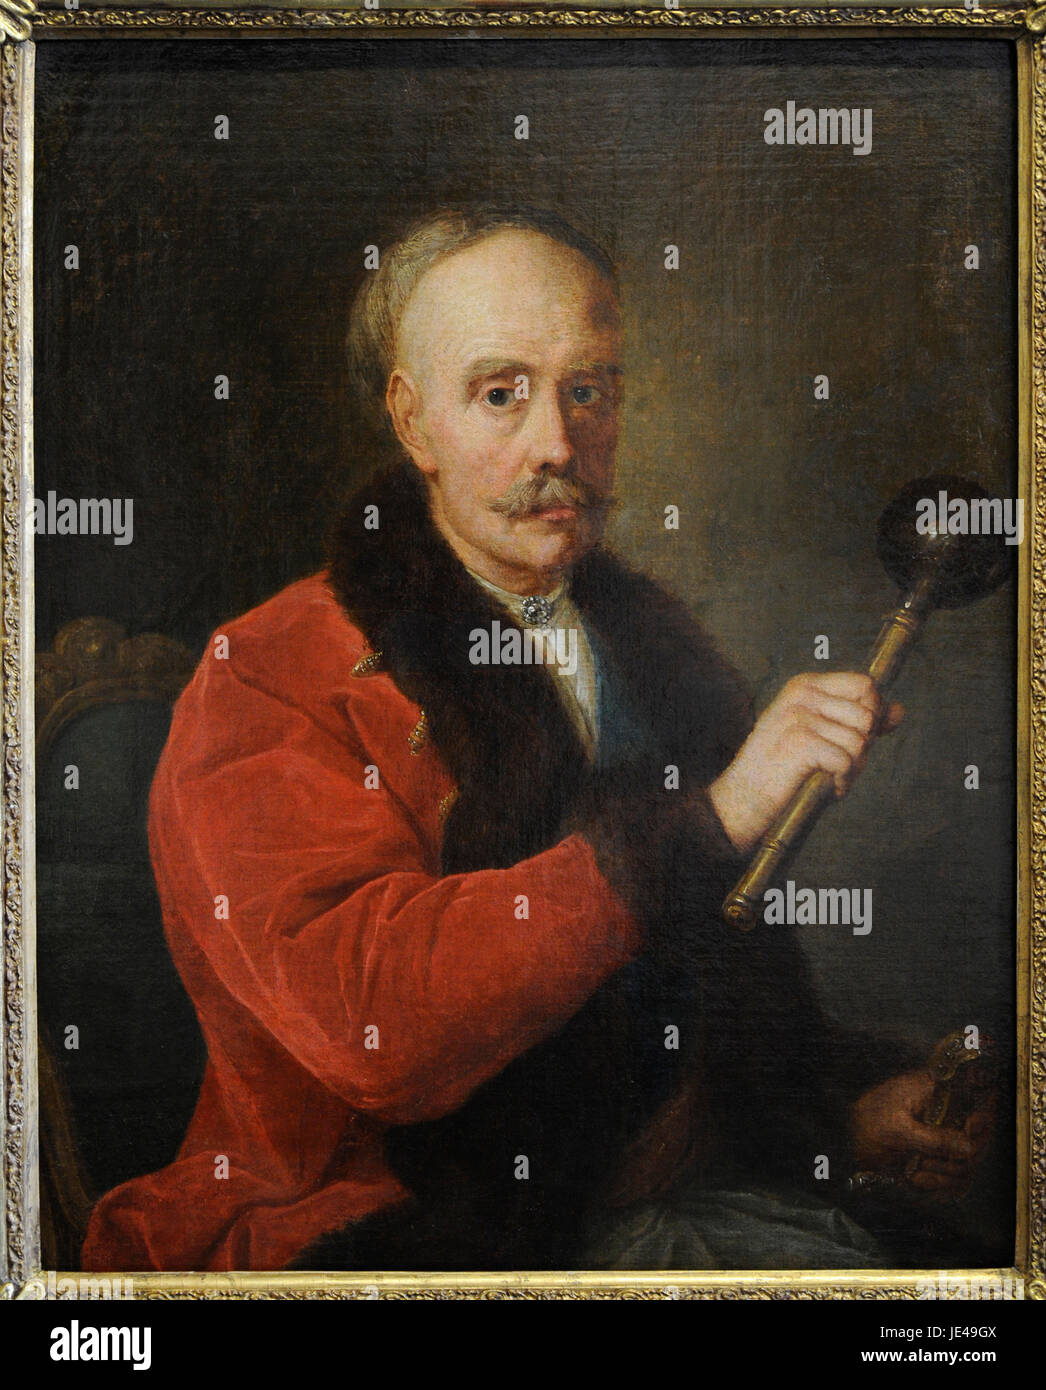 Michal Jozef Massalski (1700-1768). Duke, Castellan of Vilnius, Gran Hetman of LIthuania. Portrait, 1765. By Szymon Czechowicz (1689-1775). Vilnius Picture Gallery, Lithuania. Stock Photo